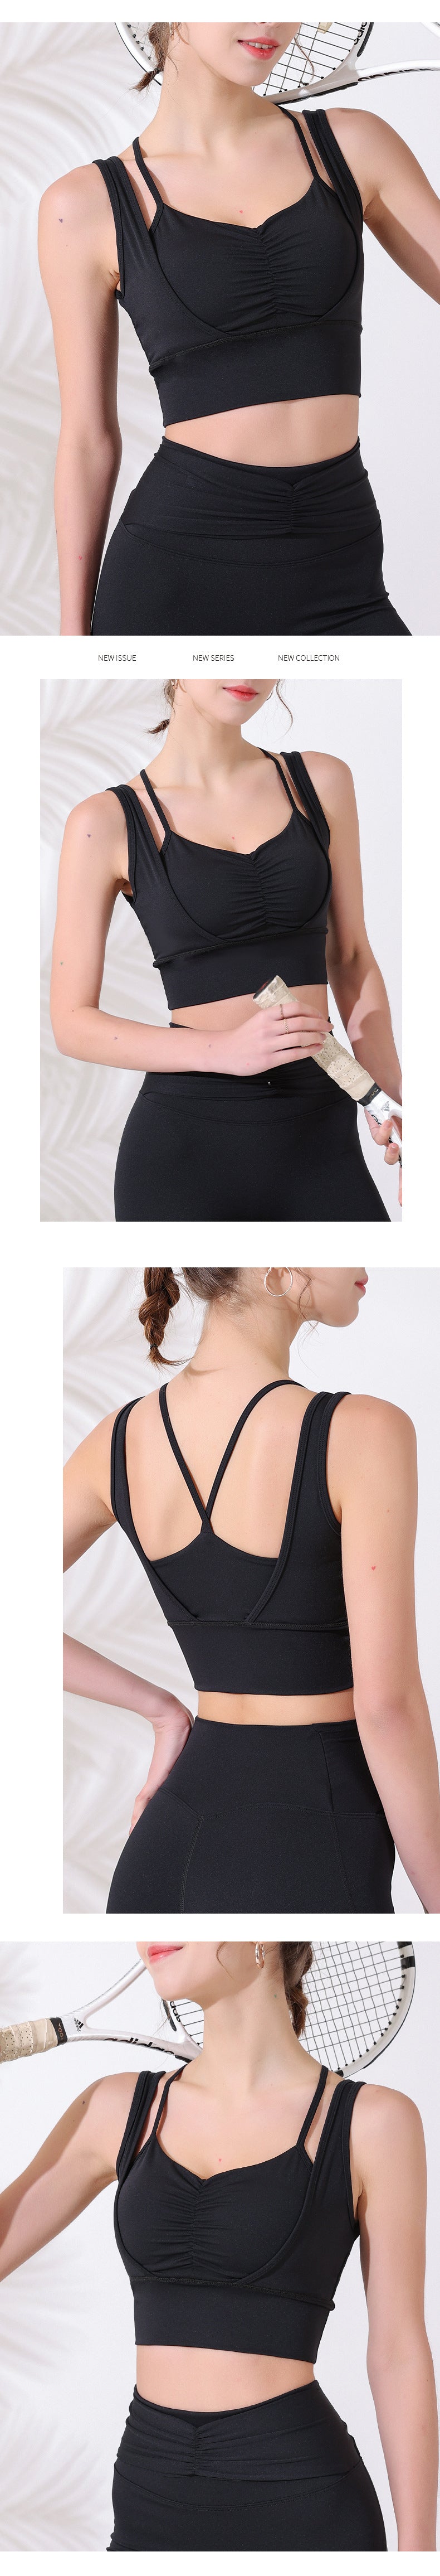 Sports underwear women's double shoulder straps bra women's yoga fitness front running shockproof